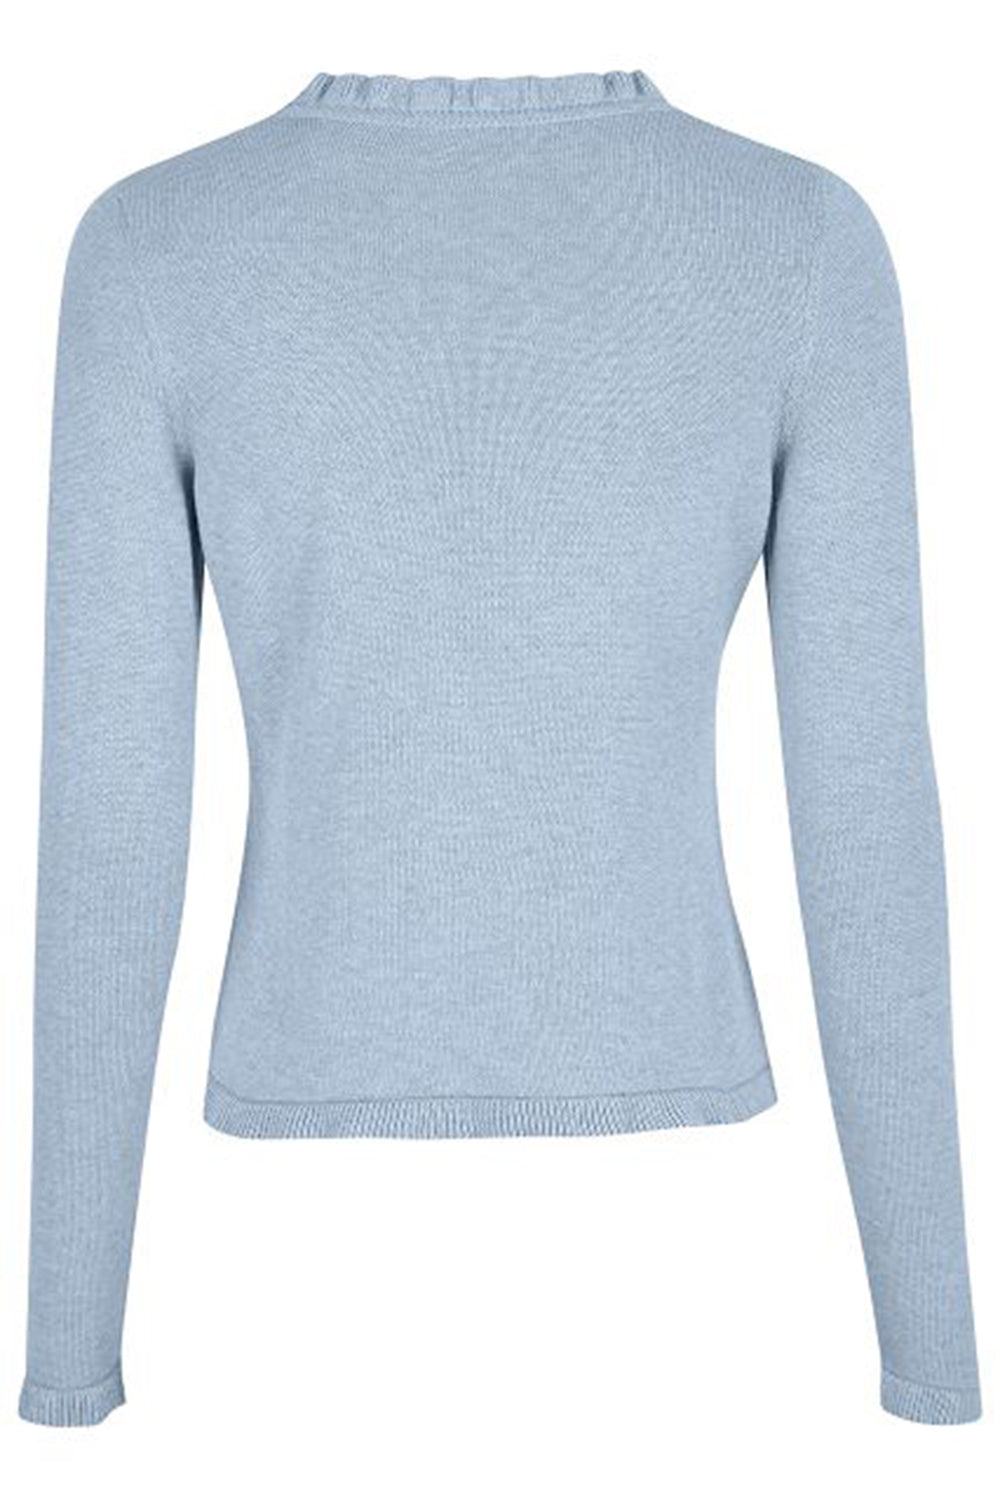 Women's knitted sweater Pfaffing